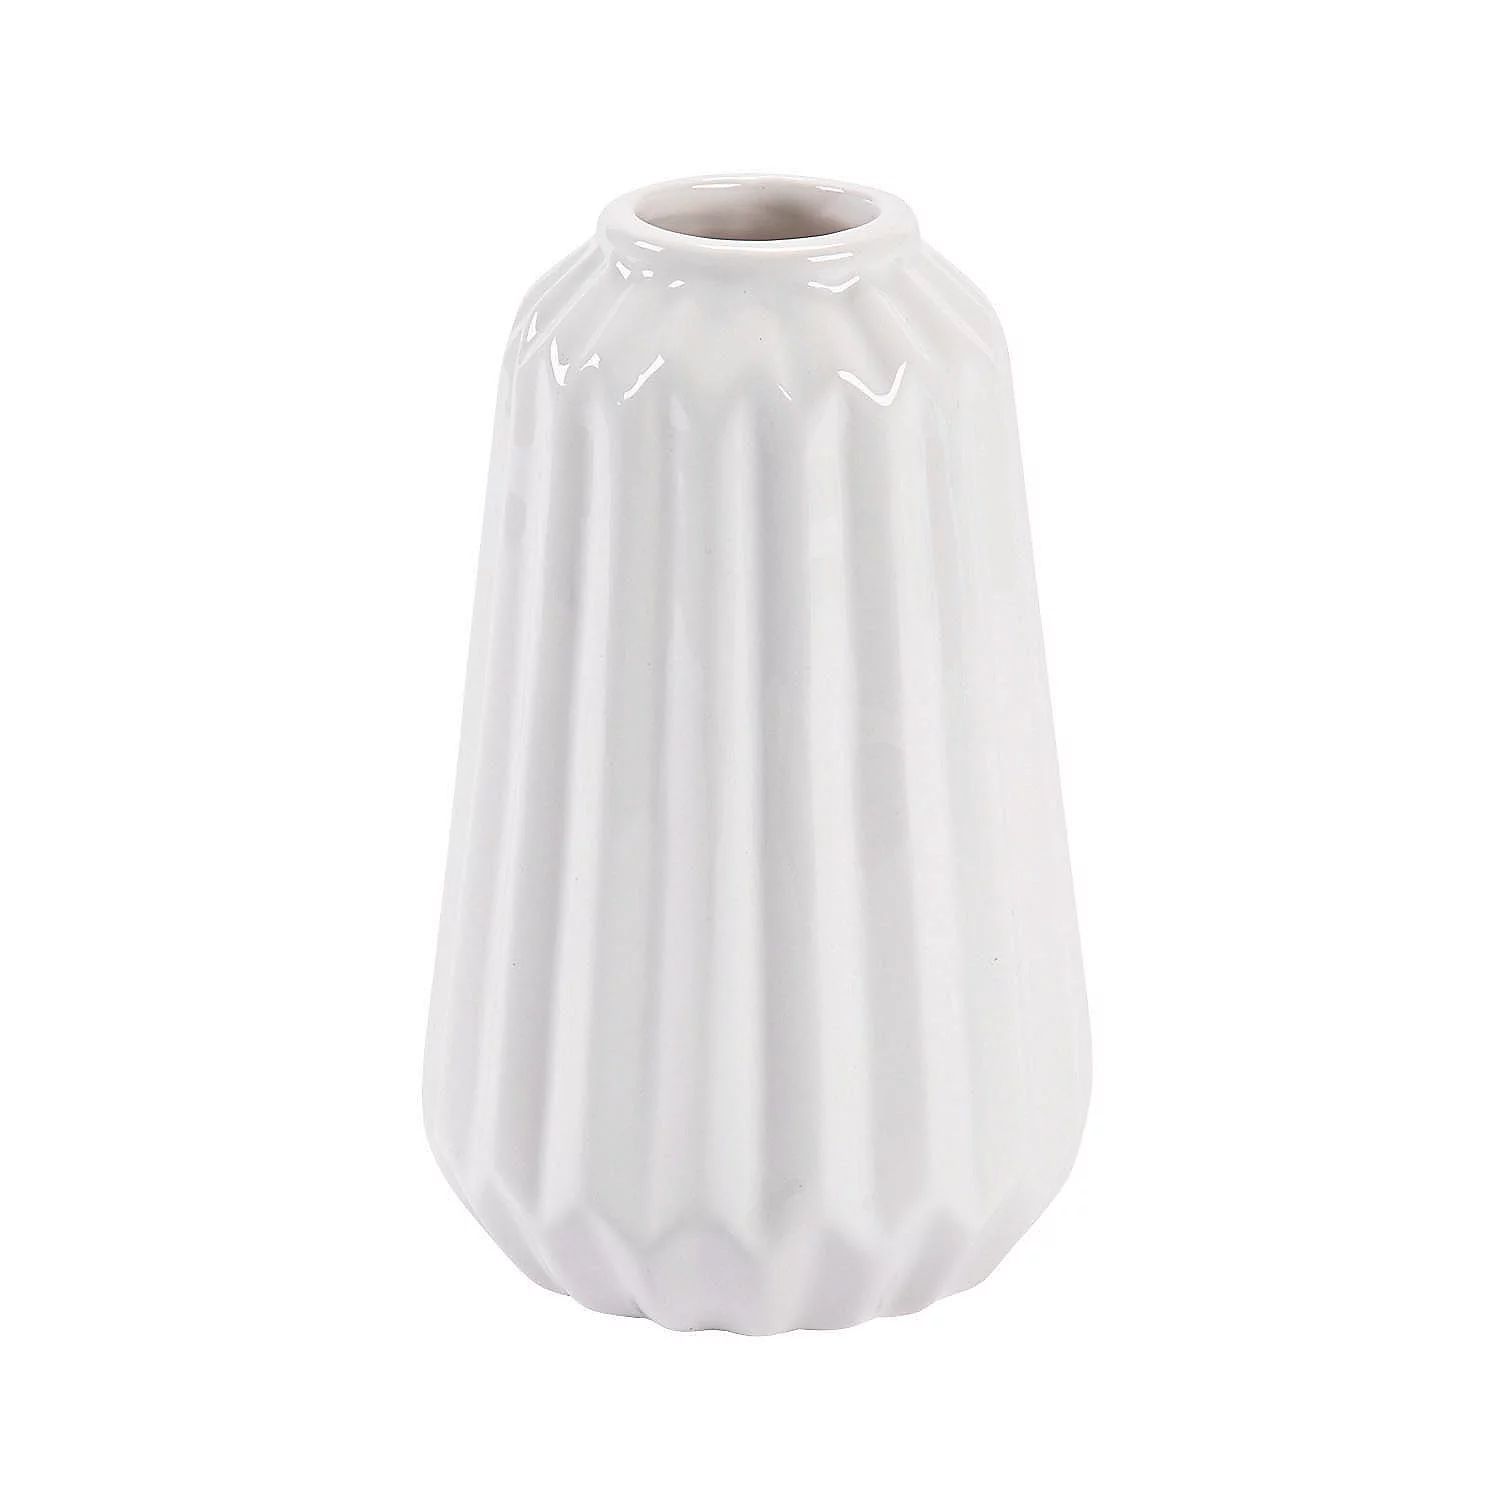 White Ceramic Vase 3Pc - Home Decor - 3 Pieces | Walmart (US)